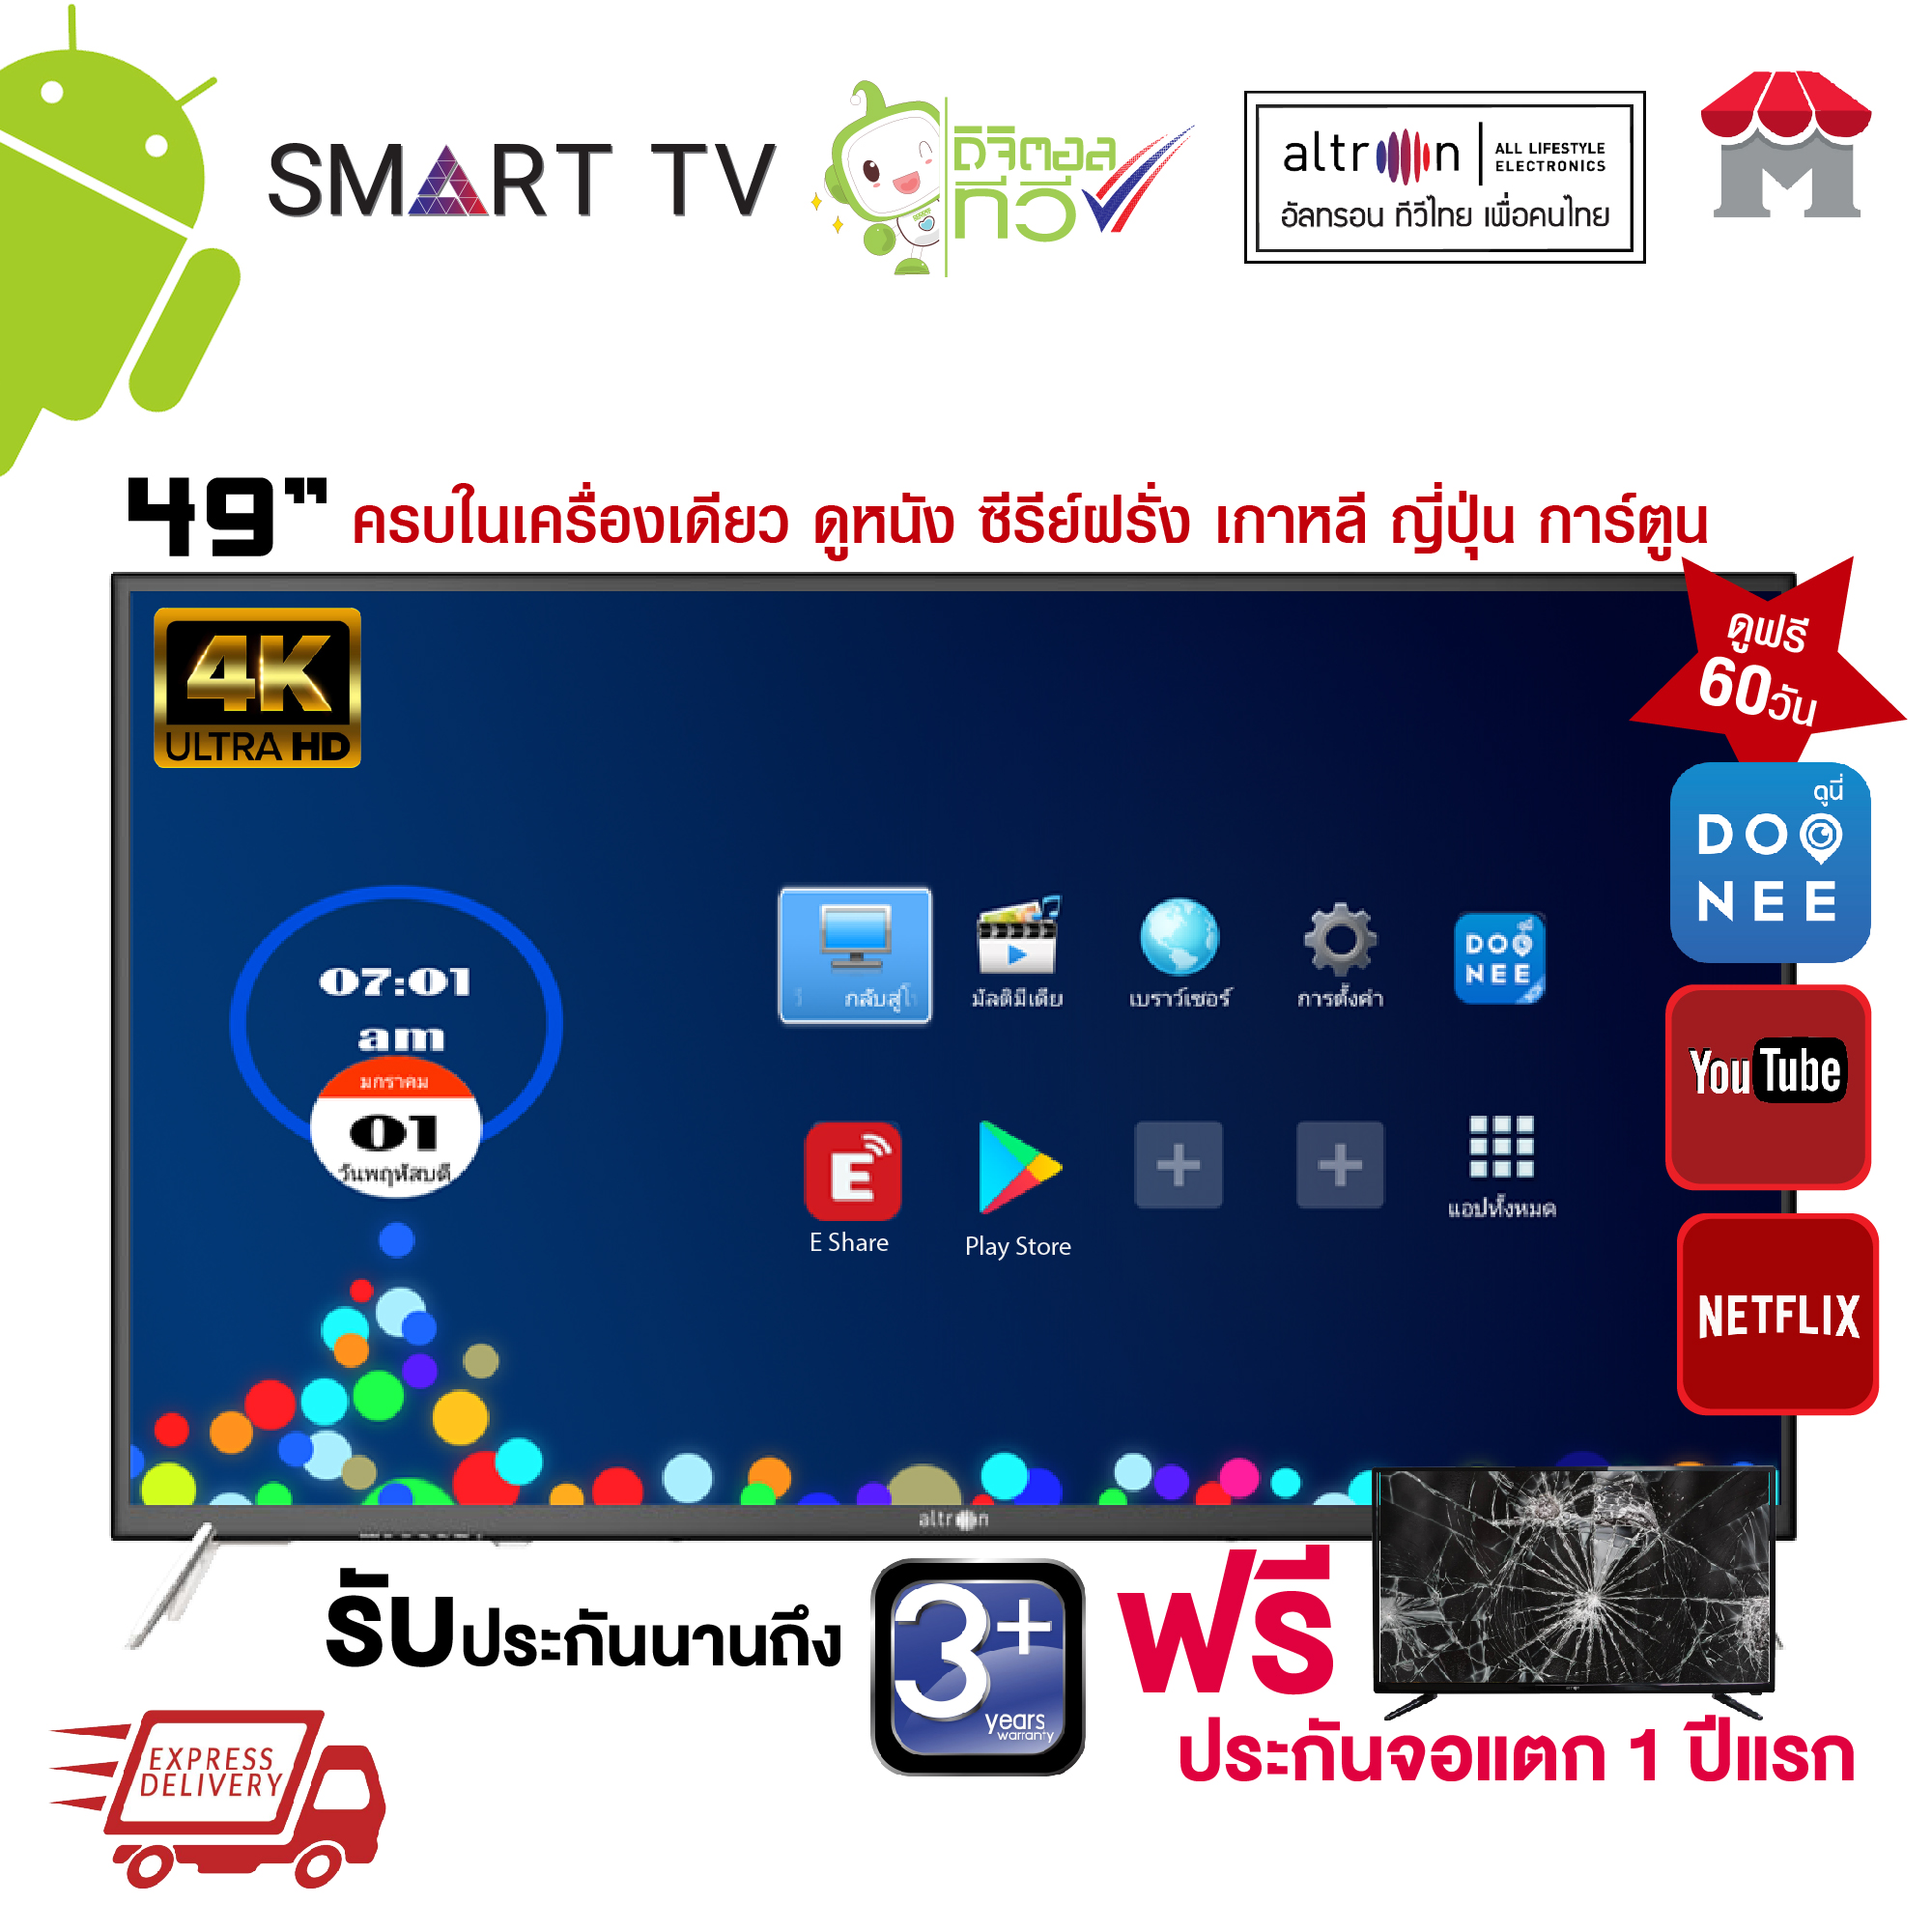 altron Smart TV 4K UHD ขนาด 49 นิ้ว รุ่น LTV-4905 พร้อมประกัน 3 ปี จอแตกเคลมได้***